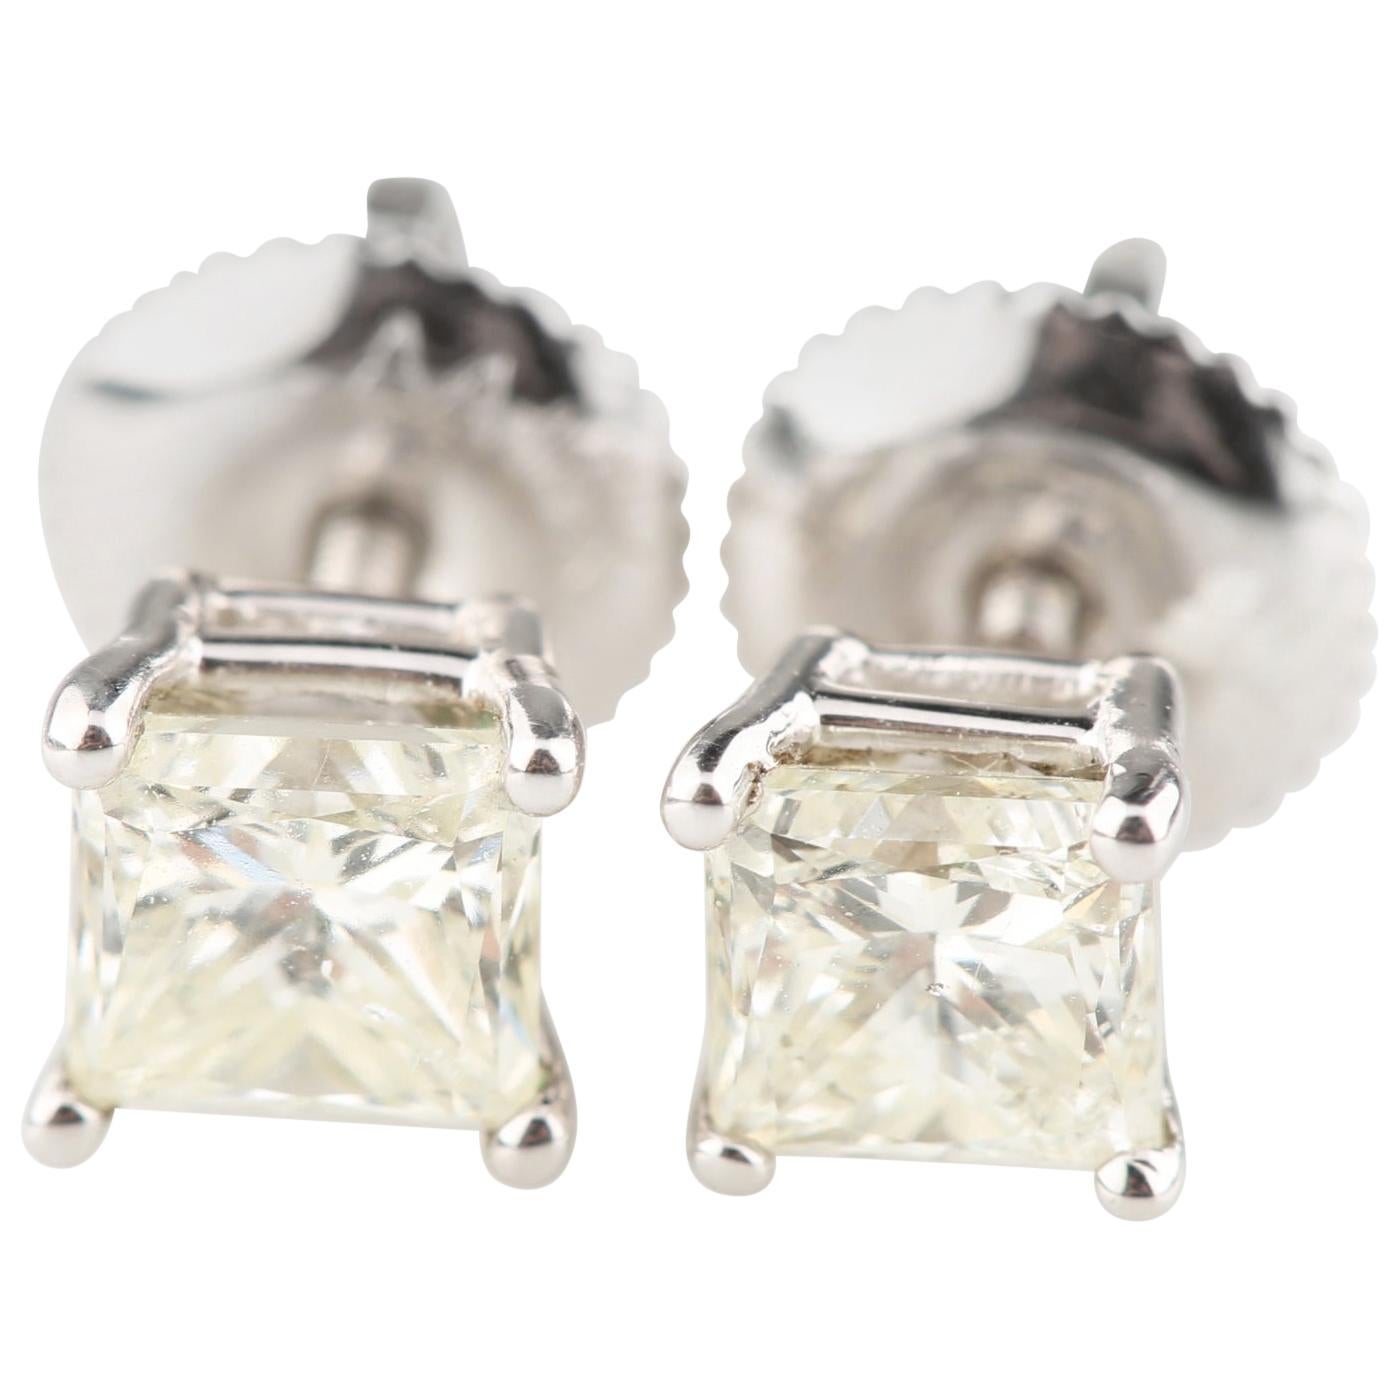 0.99 Carat Princess Cut Diamond Stud Earrings with Screwbacks in White Gold